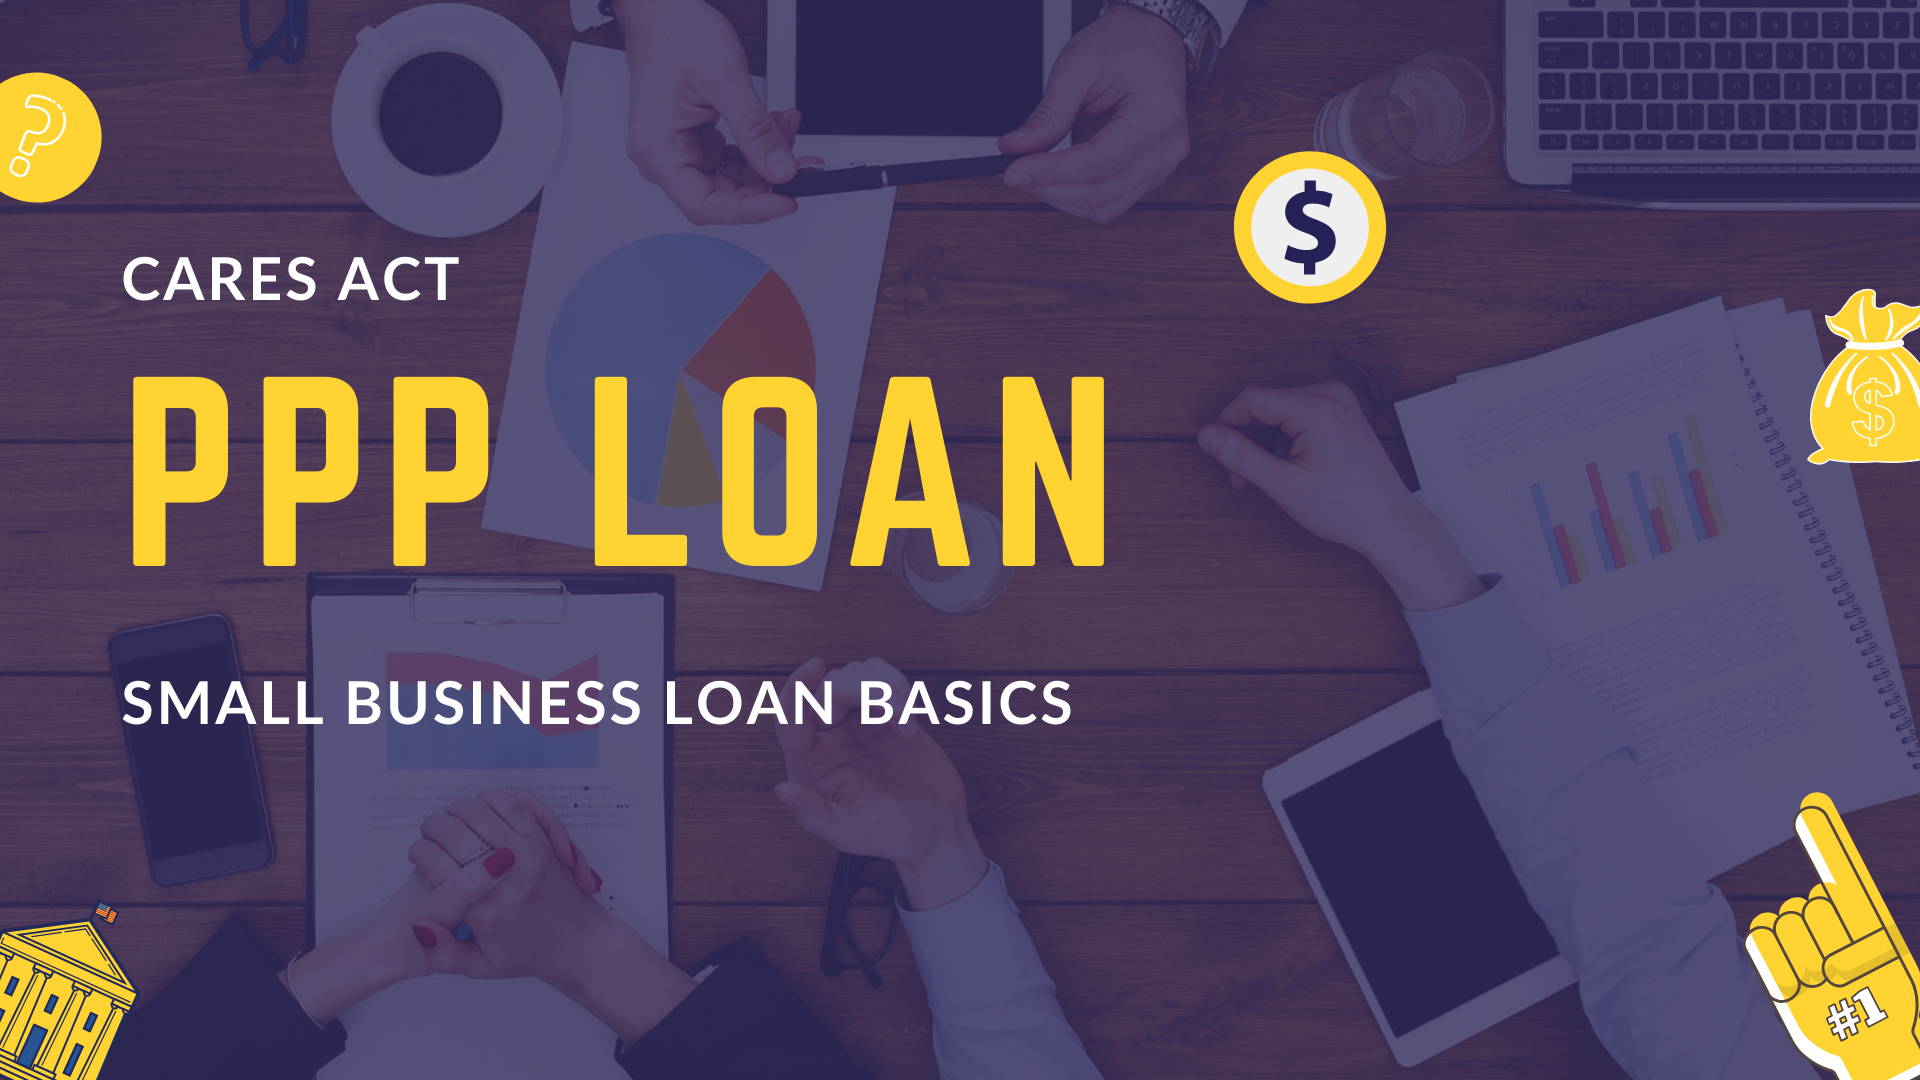 >CARES Act Small Business Loan Basics